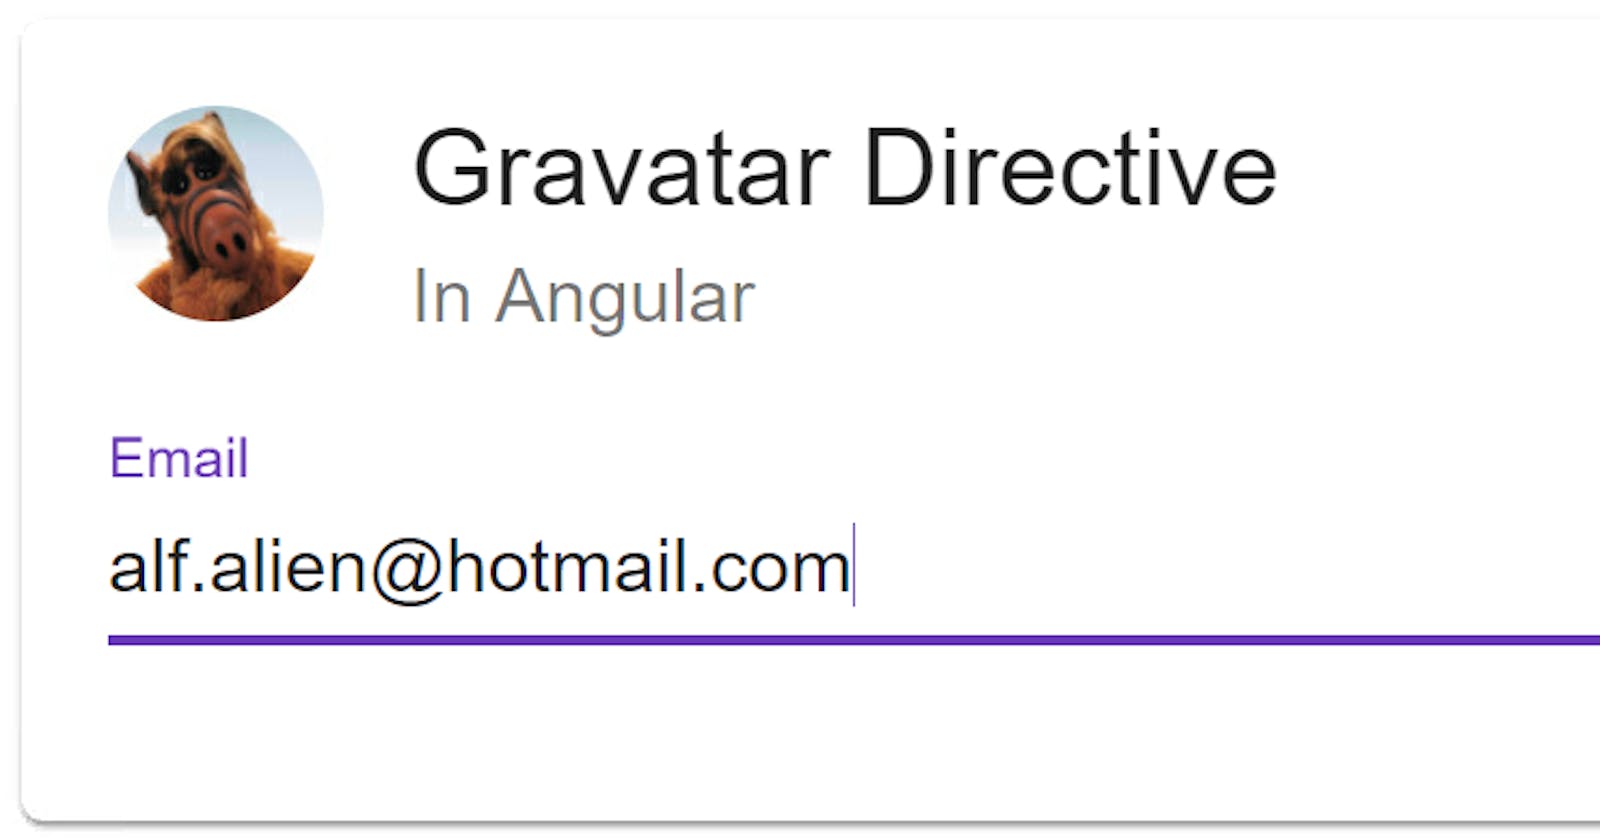 Gravatar Directive in Angular